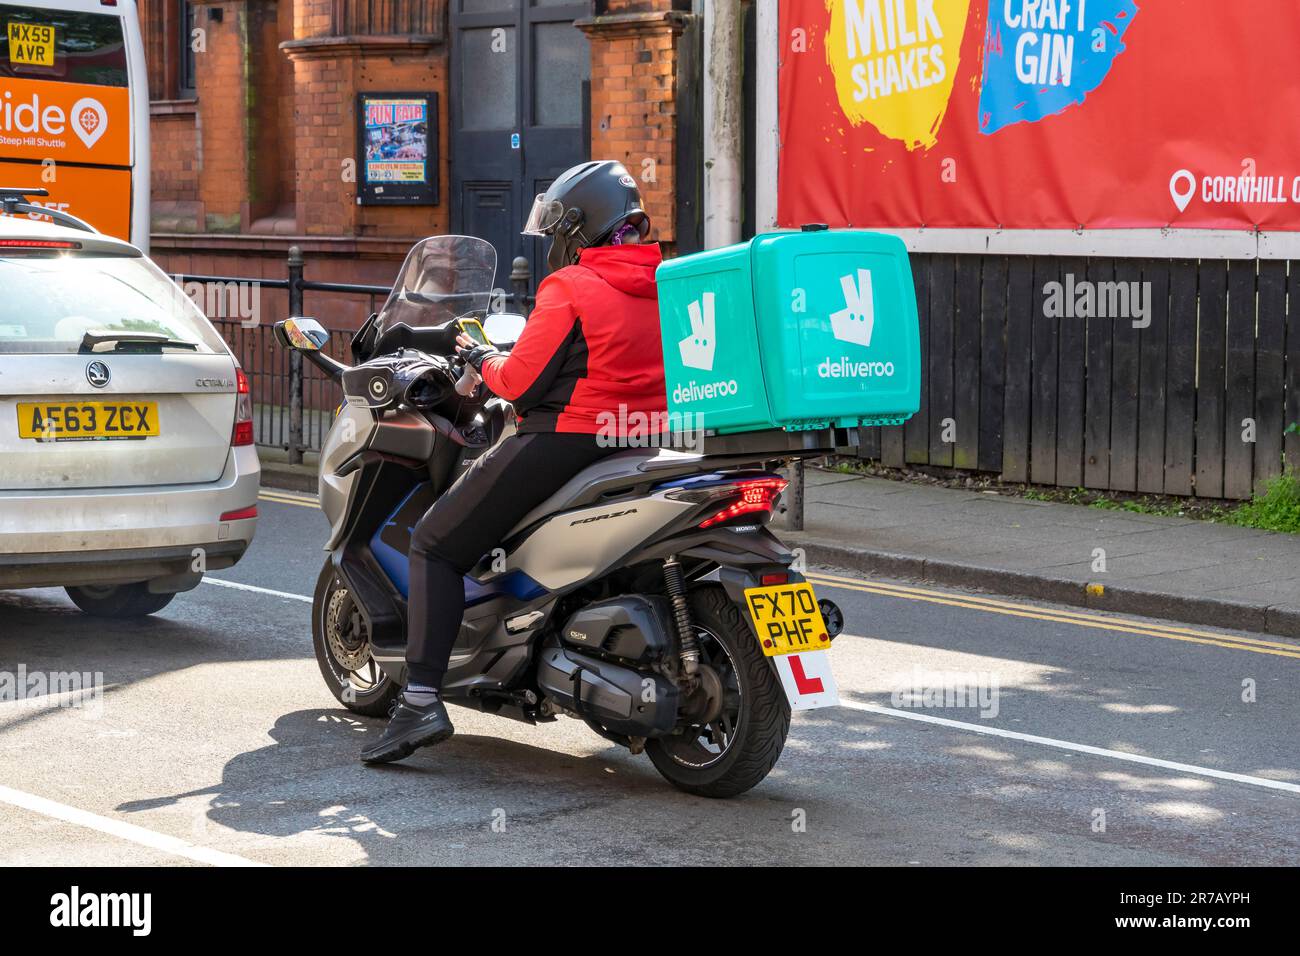 Pilote de livraison Deliveroo sur la moto Honda Forza, Silver Street, Lincoln City, Lincolnshire, Angleterre, ROYAUME-UNI Banque D'Images